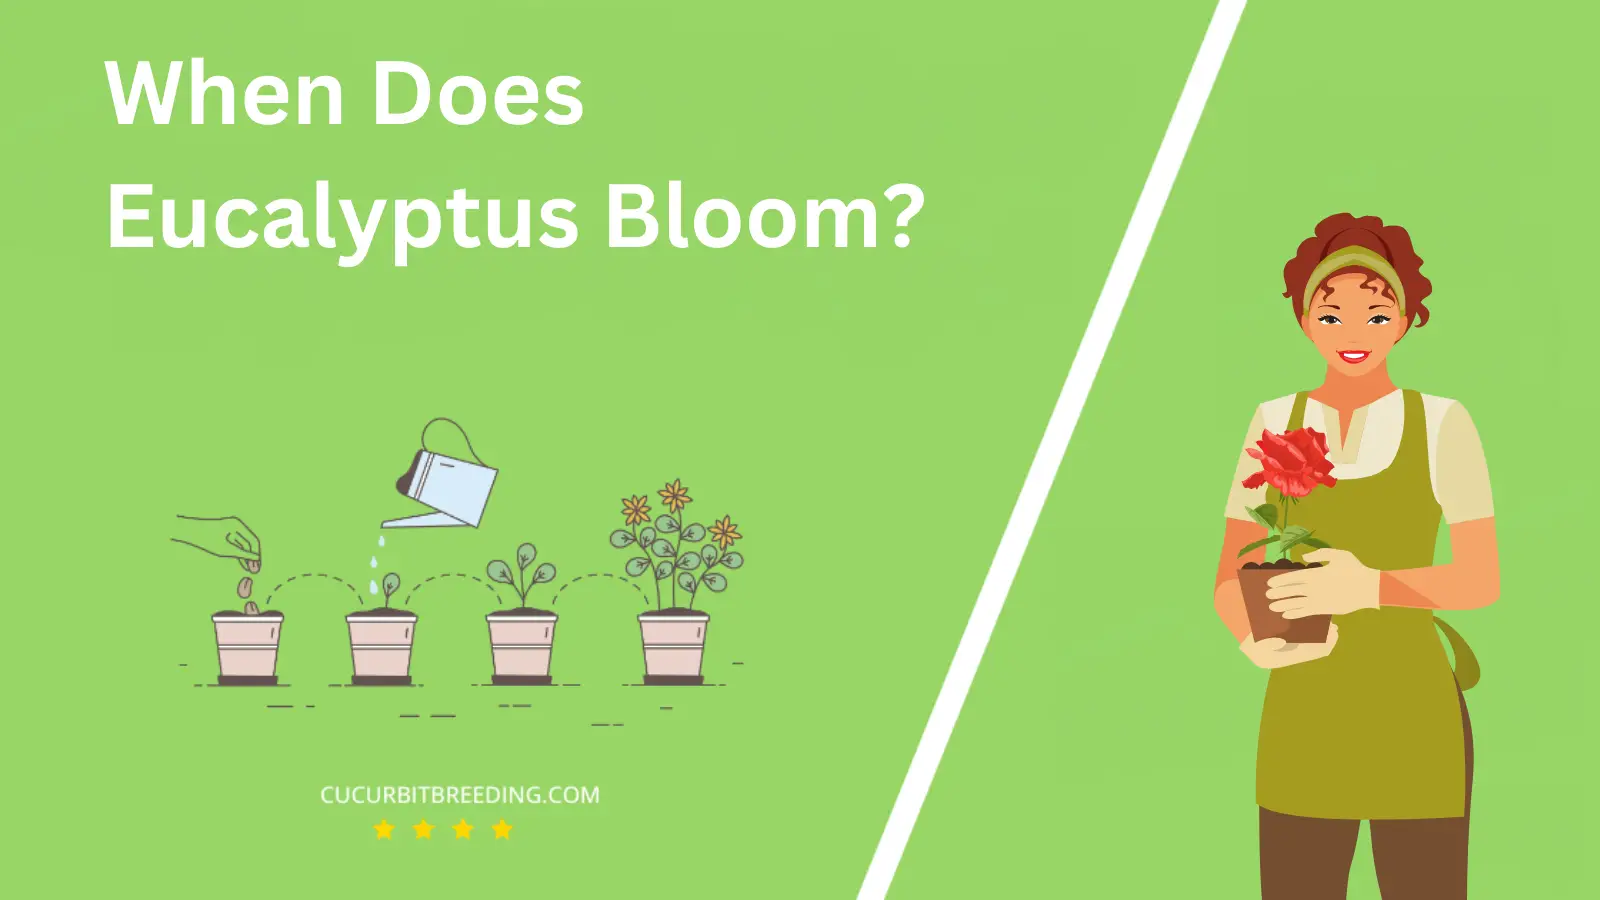 When Does Eucalyptus Bloom?